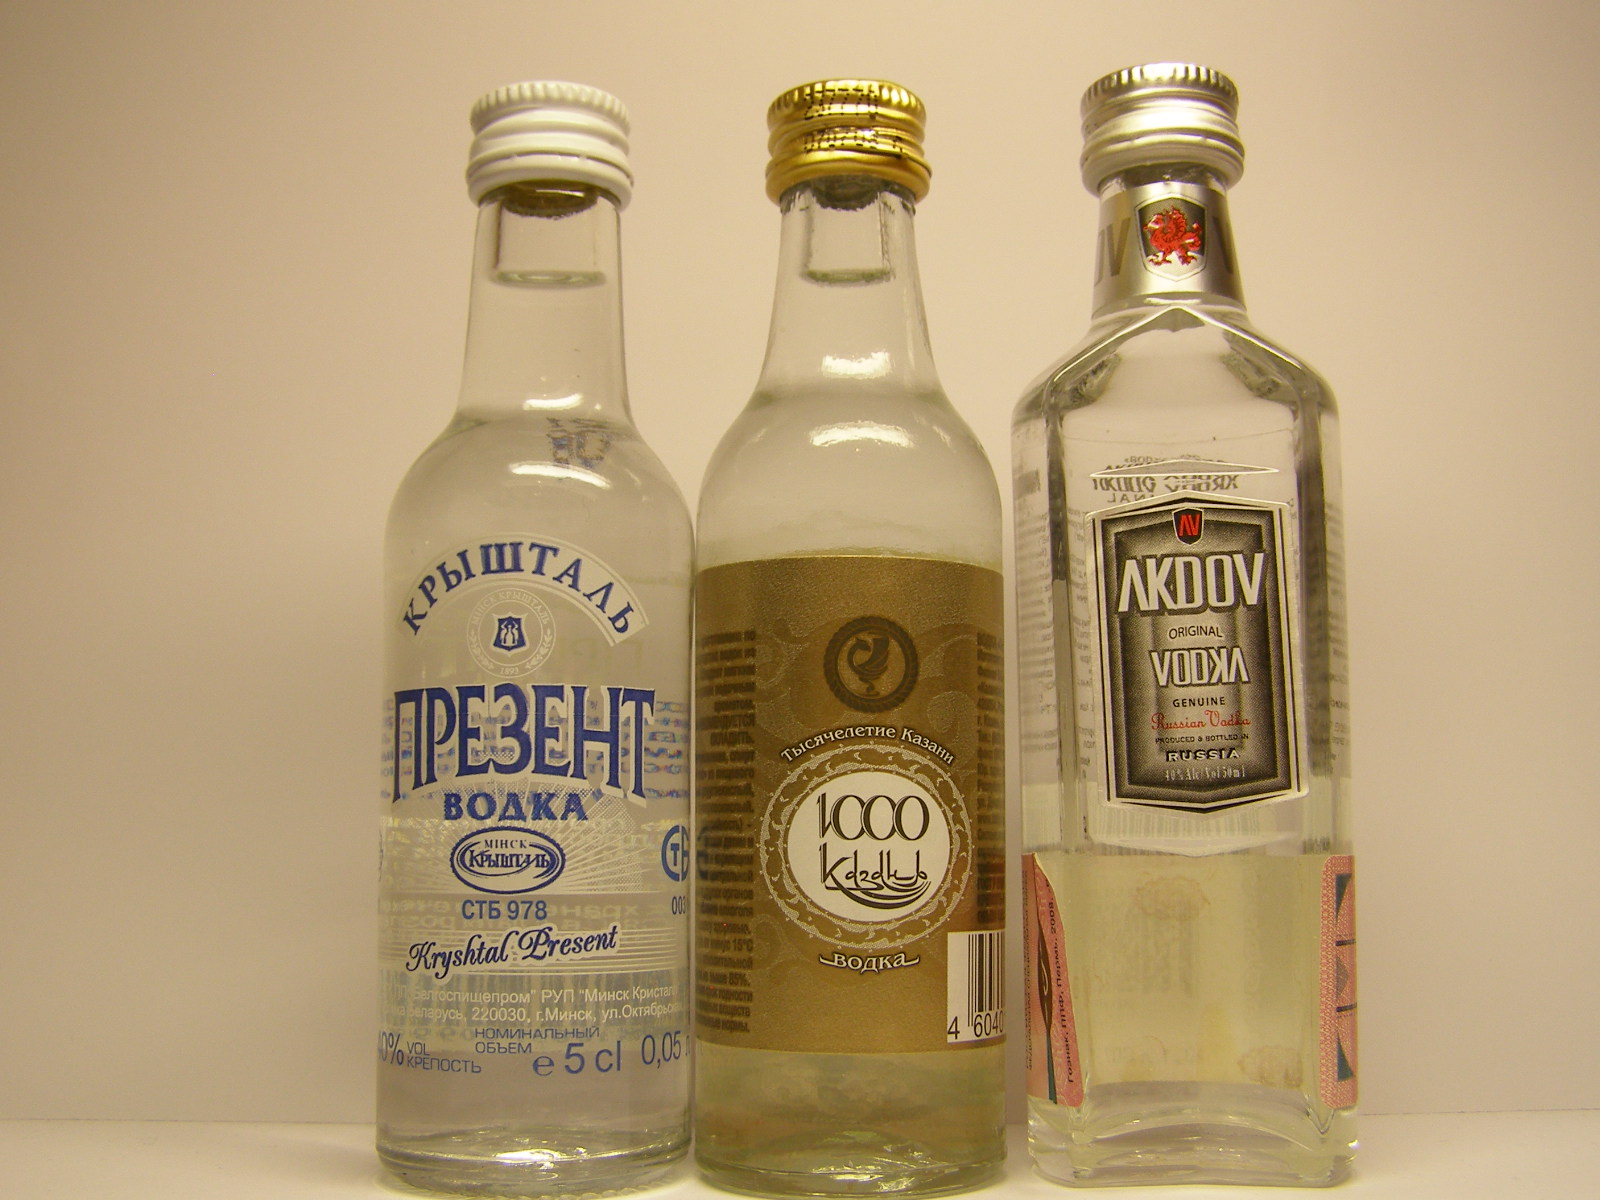 vodka akdov - www.ex.ise-p.com.